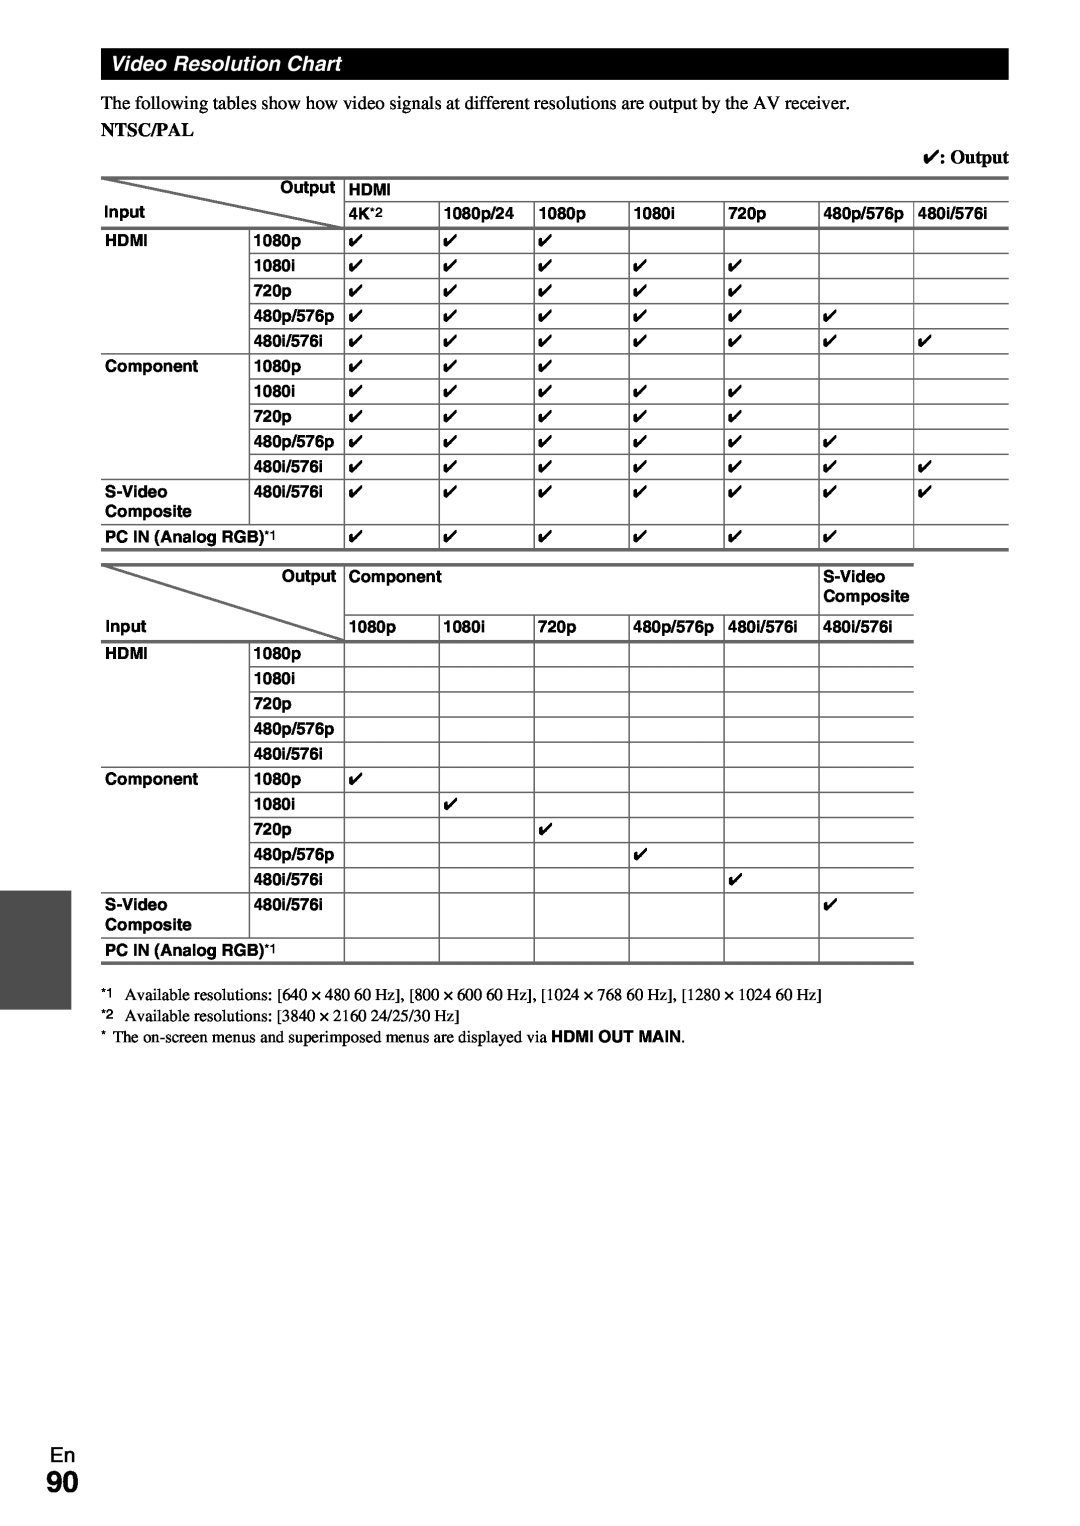 Onkyo TX-NR1009 instruction manual Video Resolution Chart, Ntsc/Pal, Output 